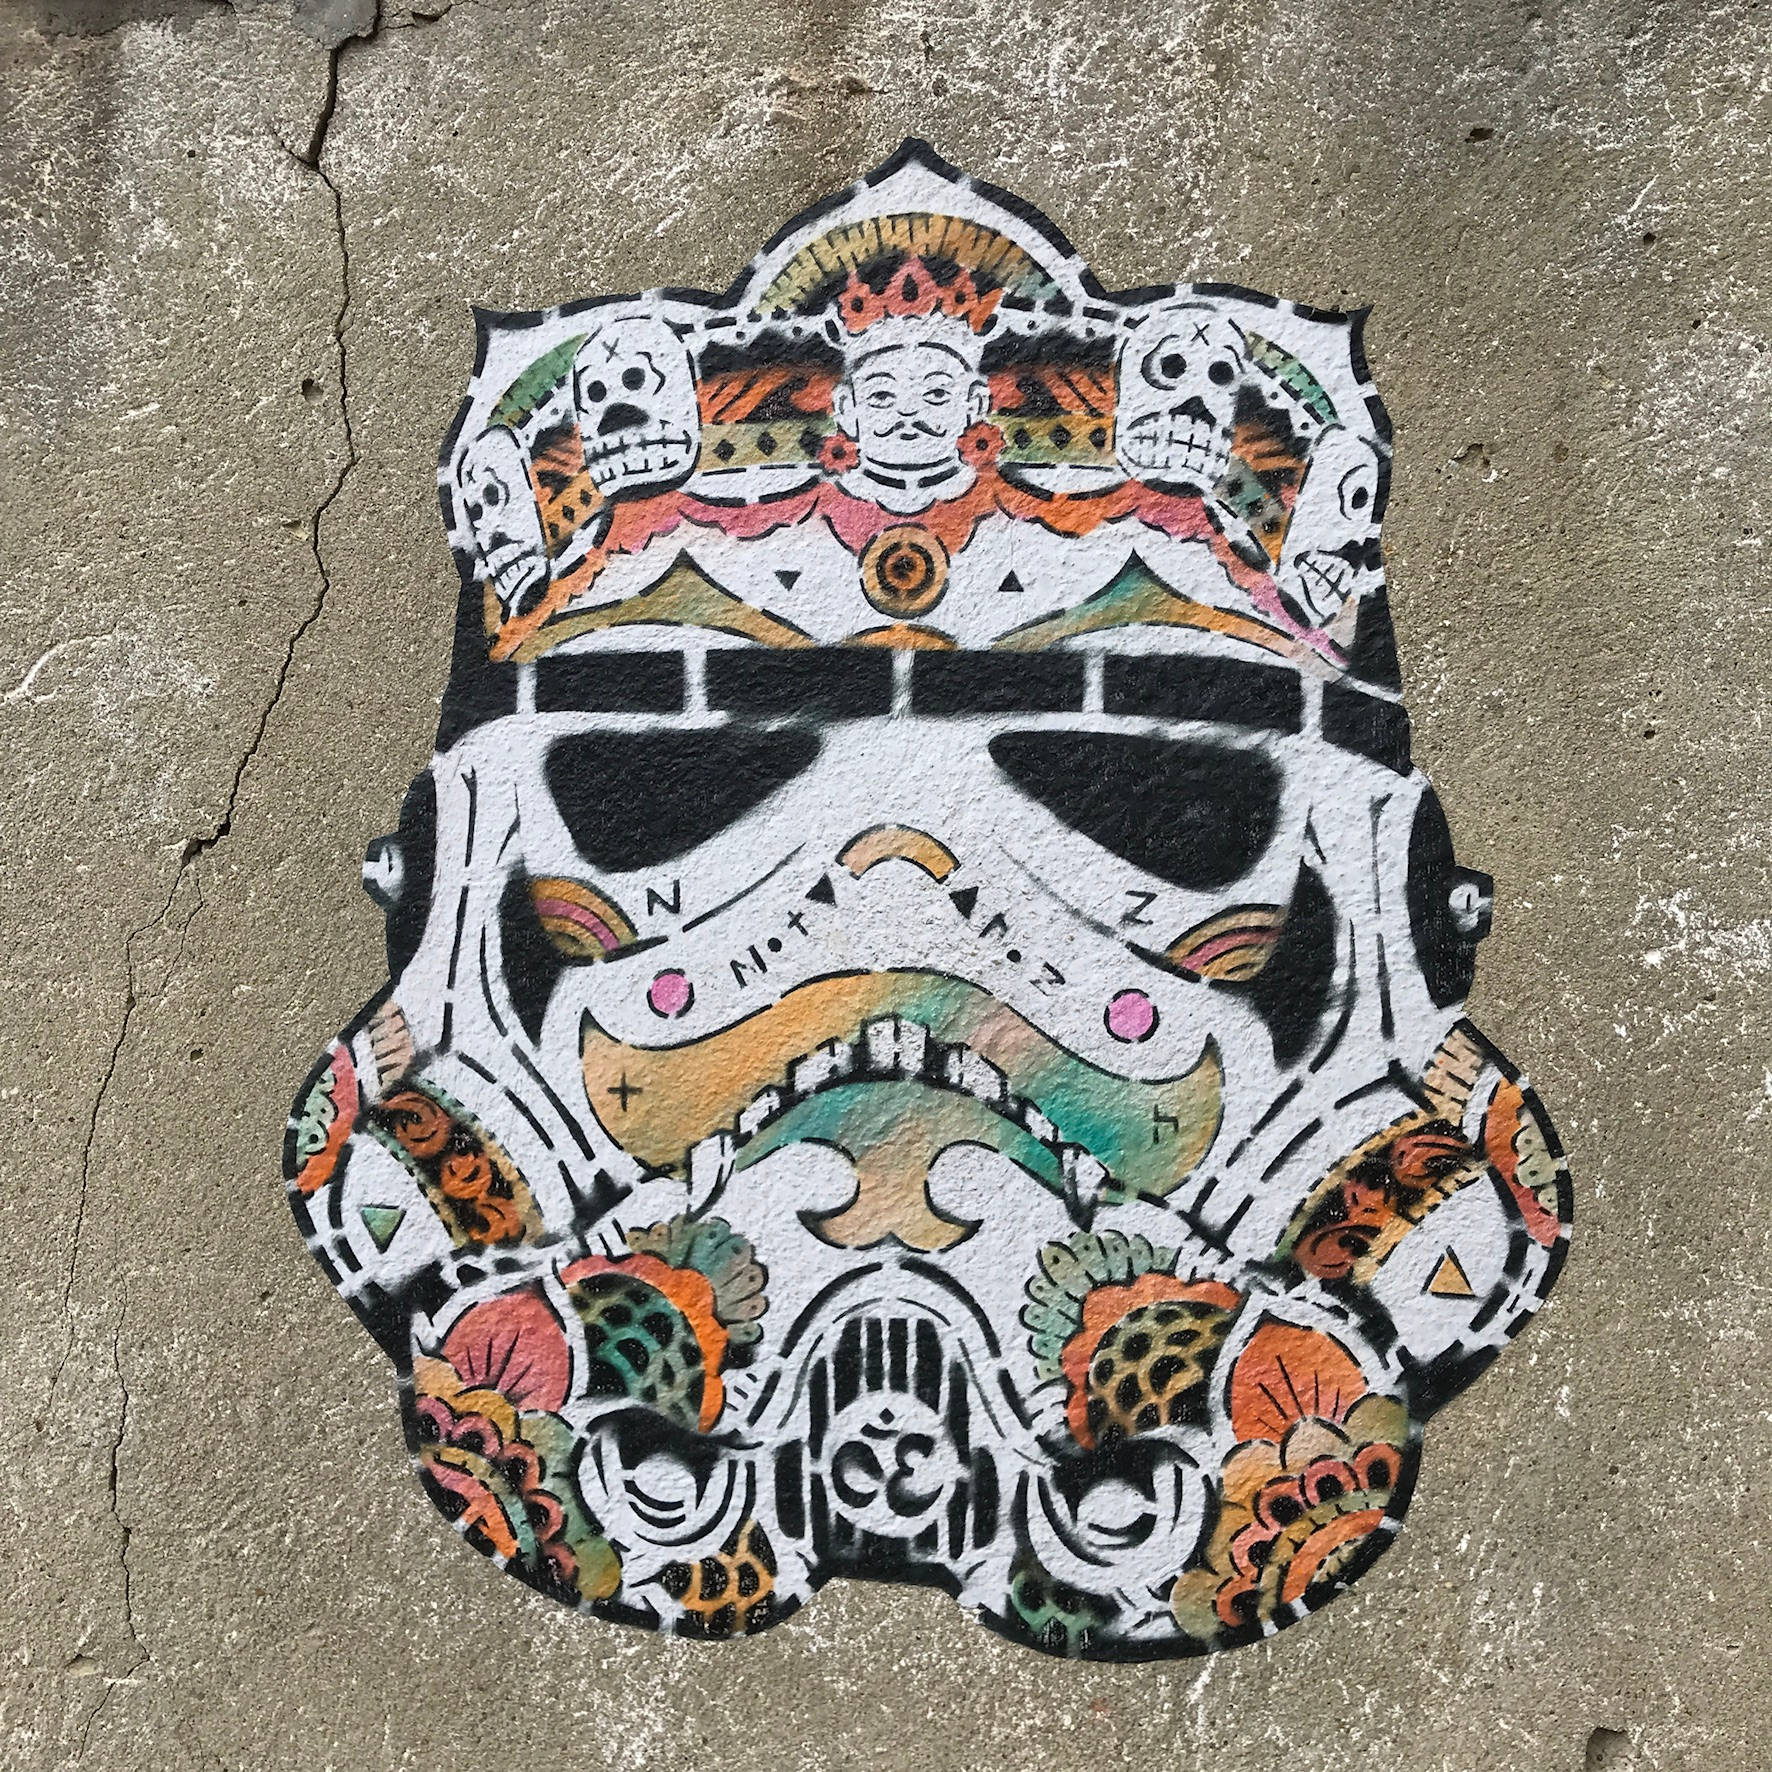 Star Wars Stormtrooper Wall Mural Wallpaper